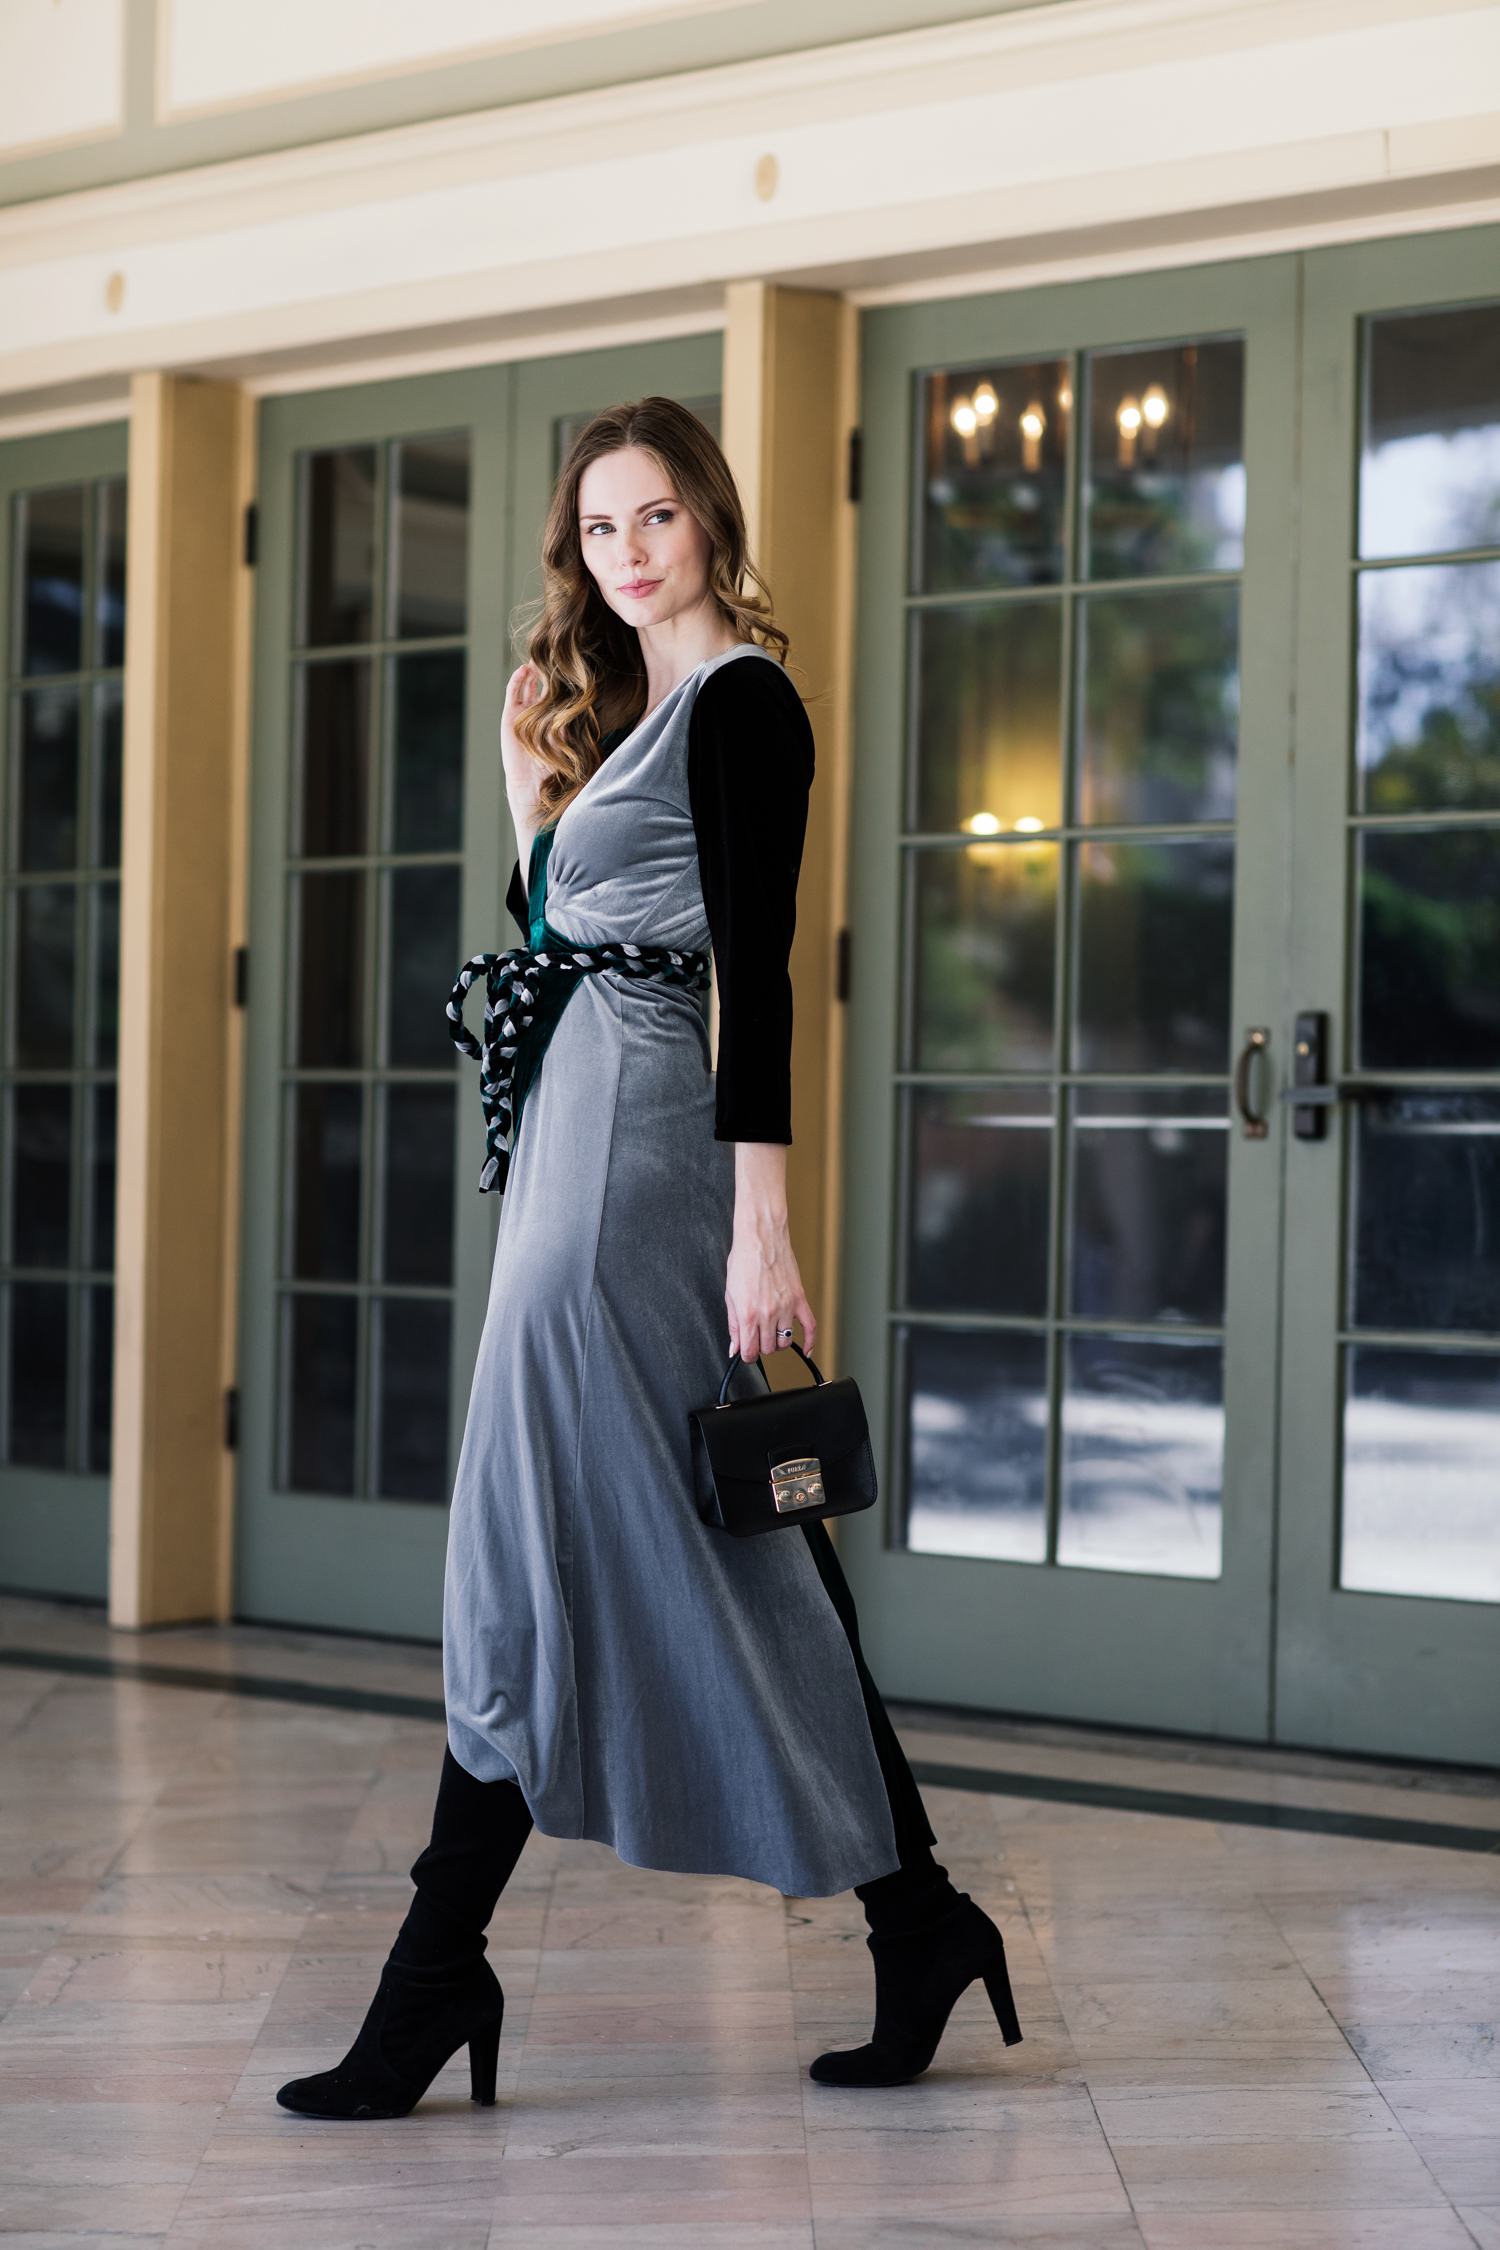 Alyssa Campanella of The A List blog wears Misa Los Angeles Paloma velvet dress for date night